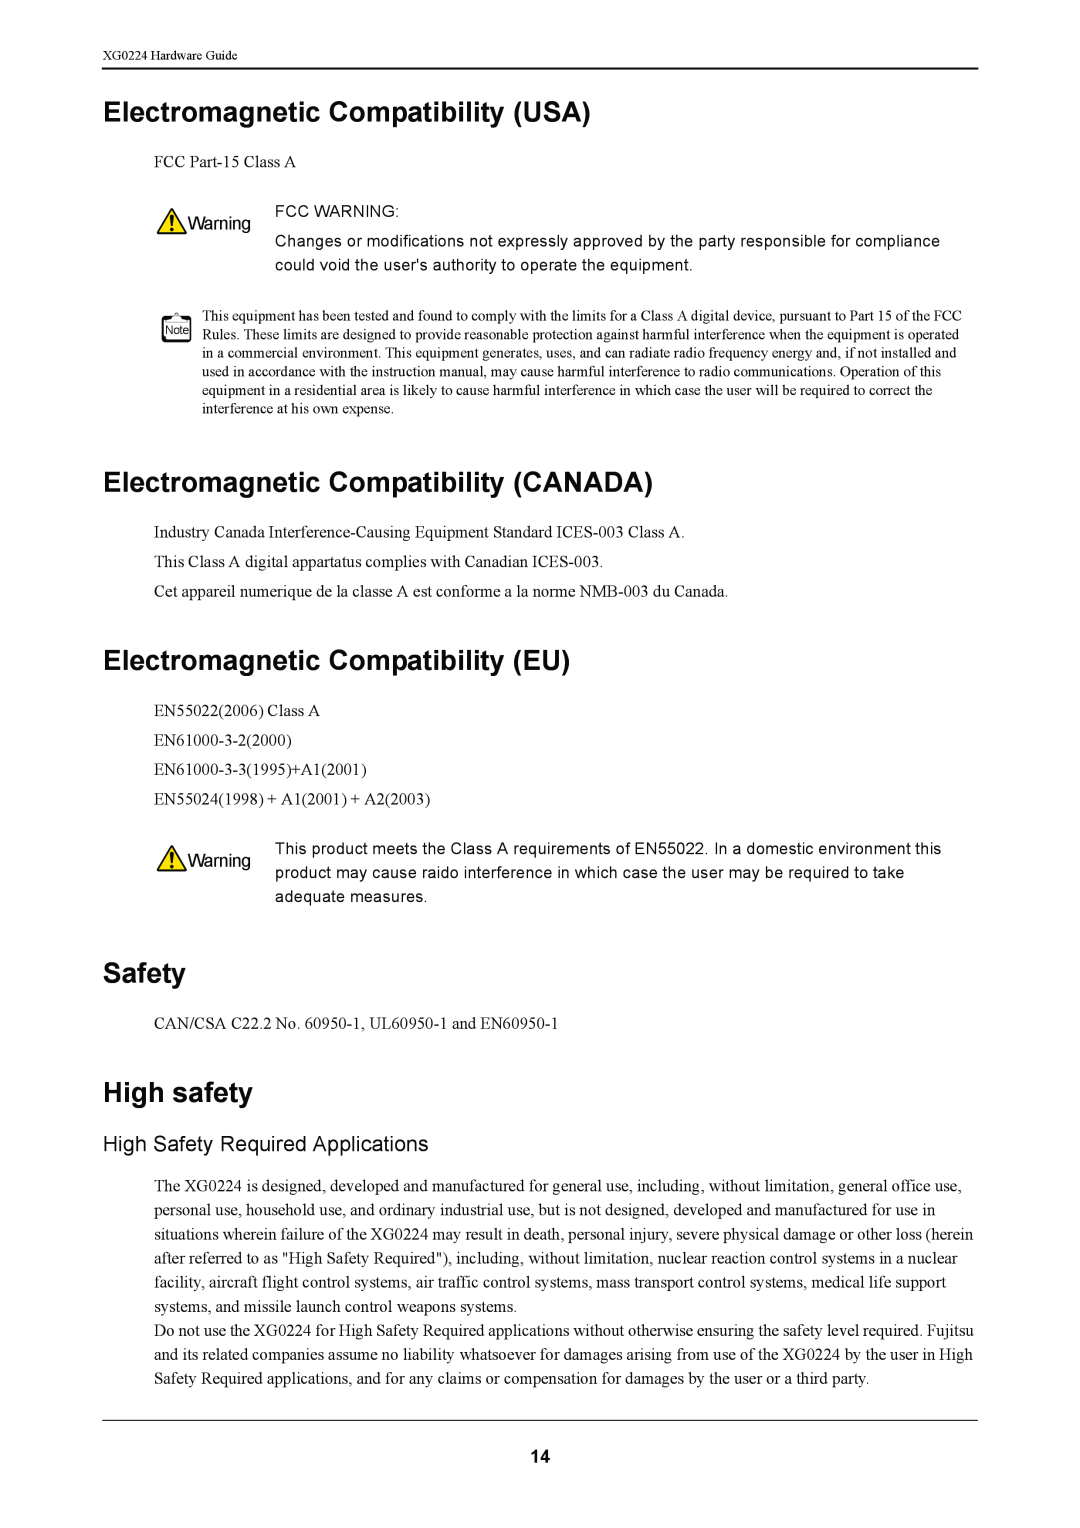 Fujitsu XG0224 Electromagnetic Compatibility USA, Electromagnetic Compatibility CANADA, Electromagnetic Compatibility EU 